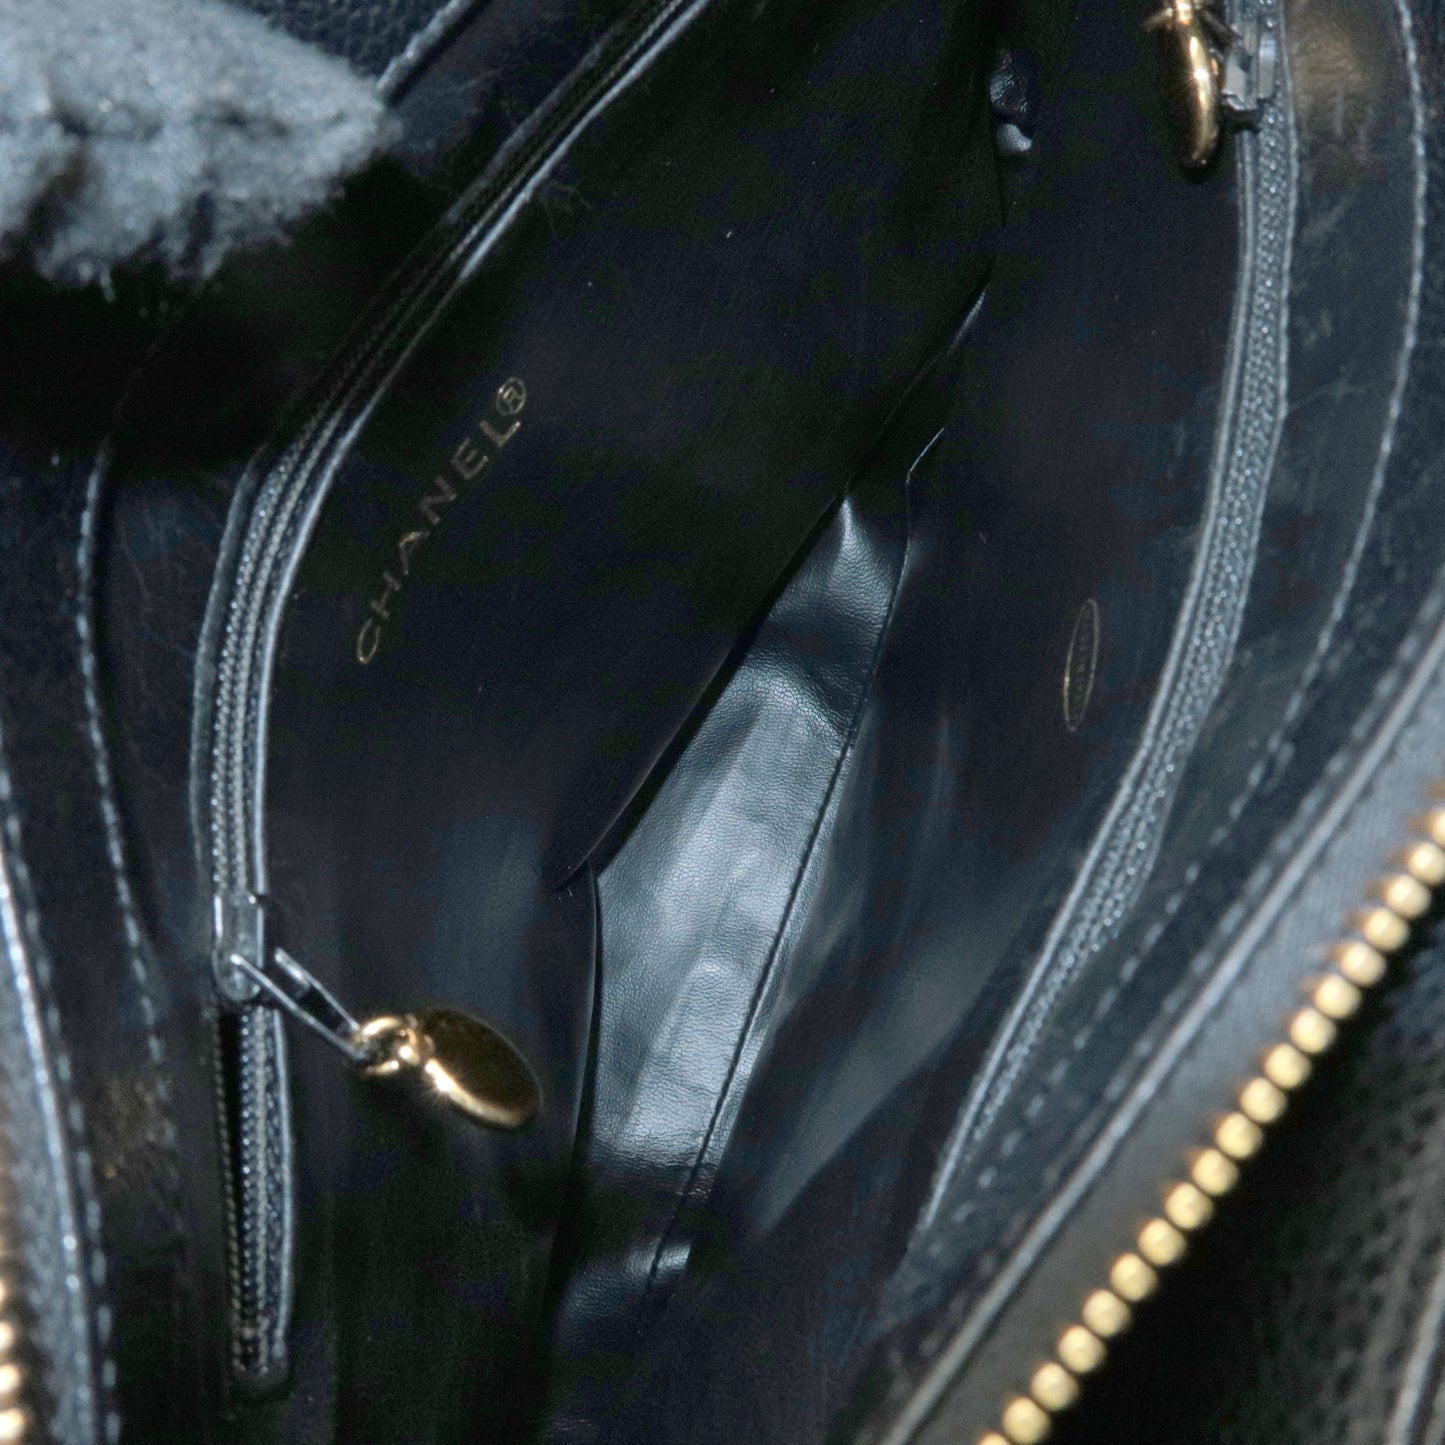 CHANEL Caviar Skin Chain Tote Bag Shoulder Bag Black Gold